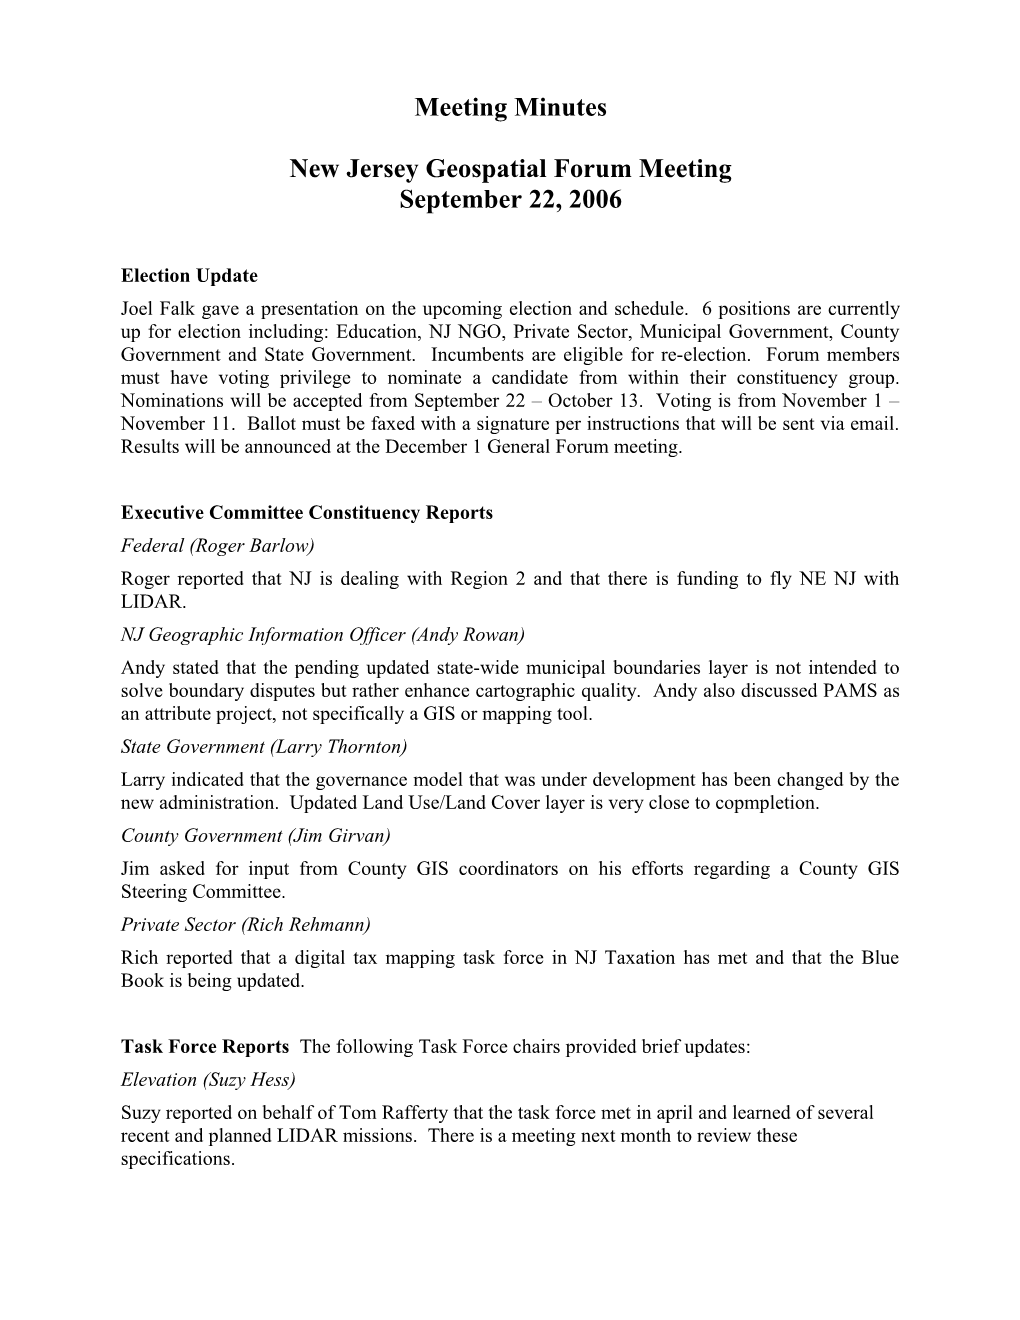 New Jersey Geospatial Forum Meeting